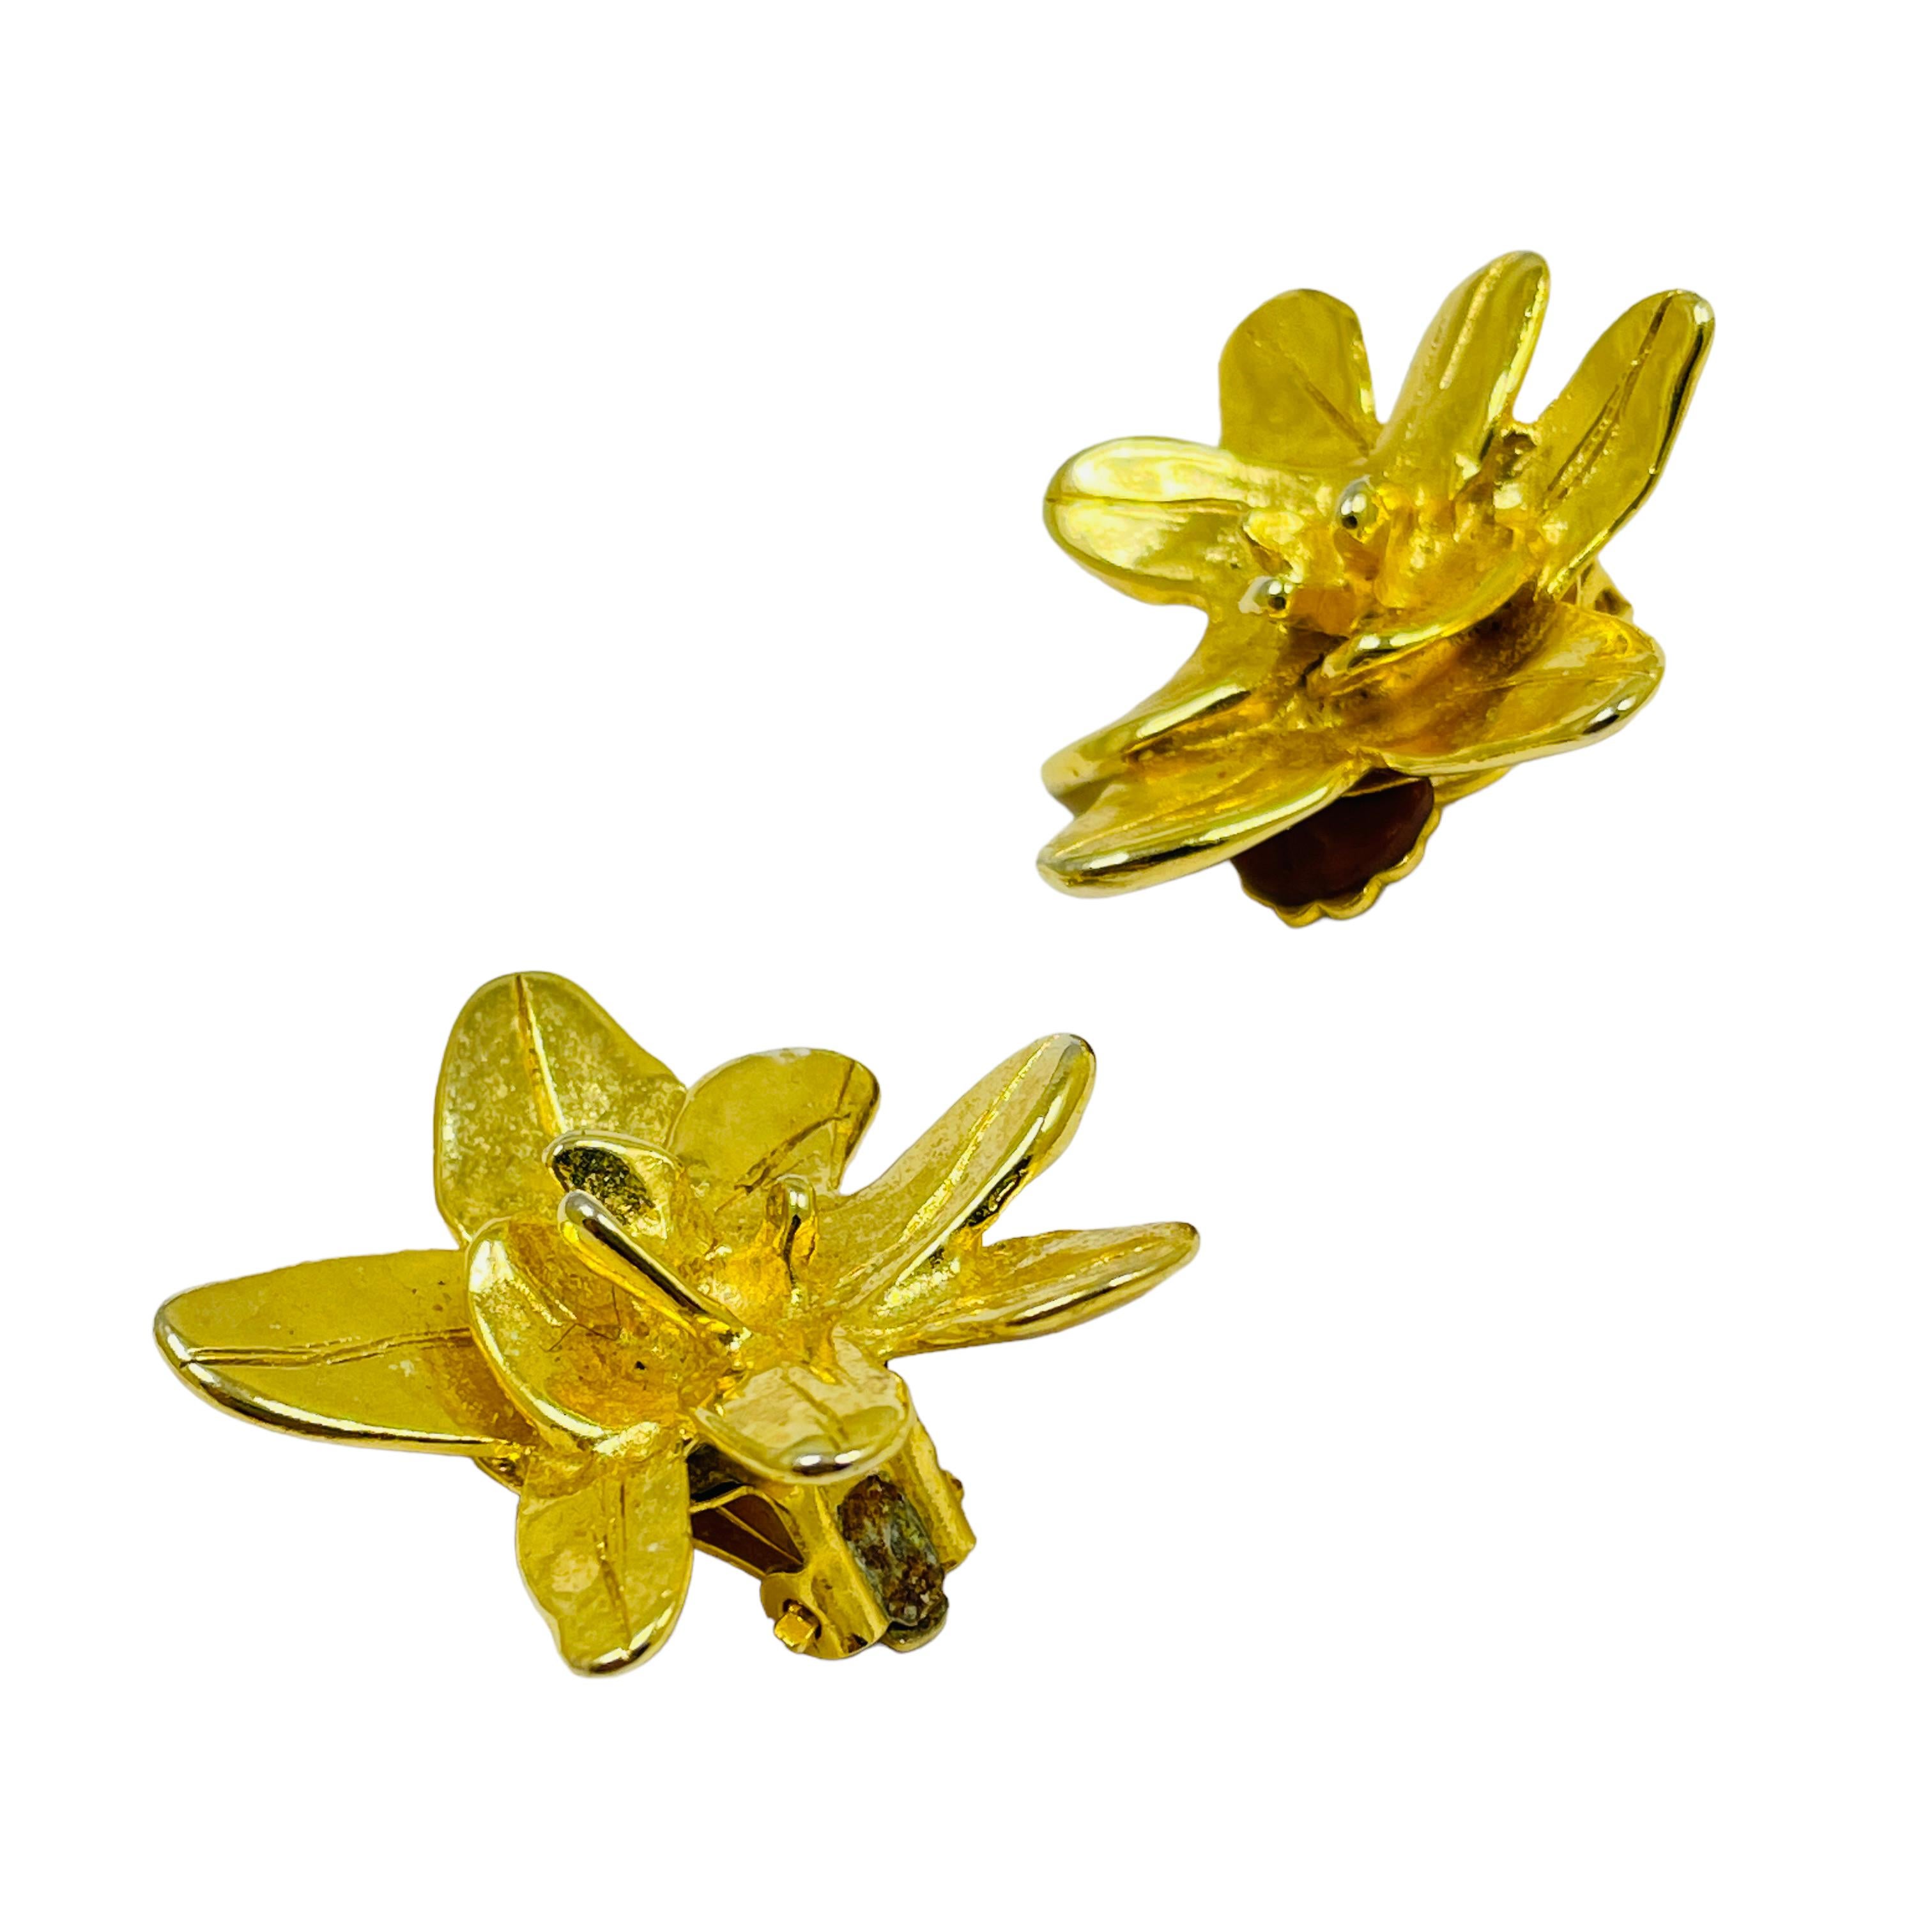 DETAILS

• unsigned

• gold tone 

• vintage designer clip on earrings

MEASUREMENTS

• 1.38